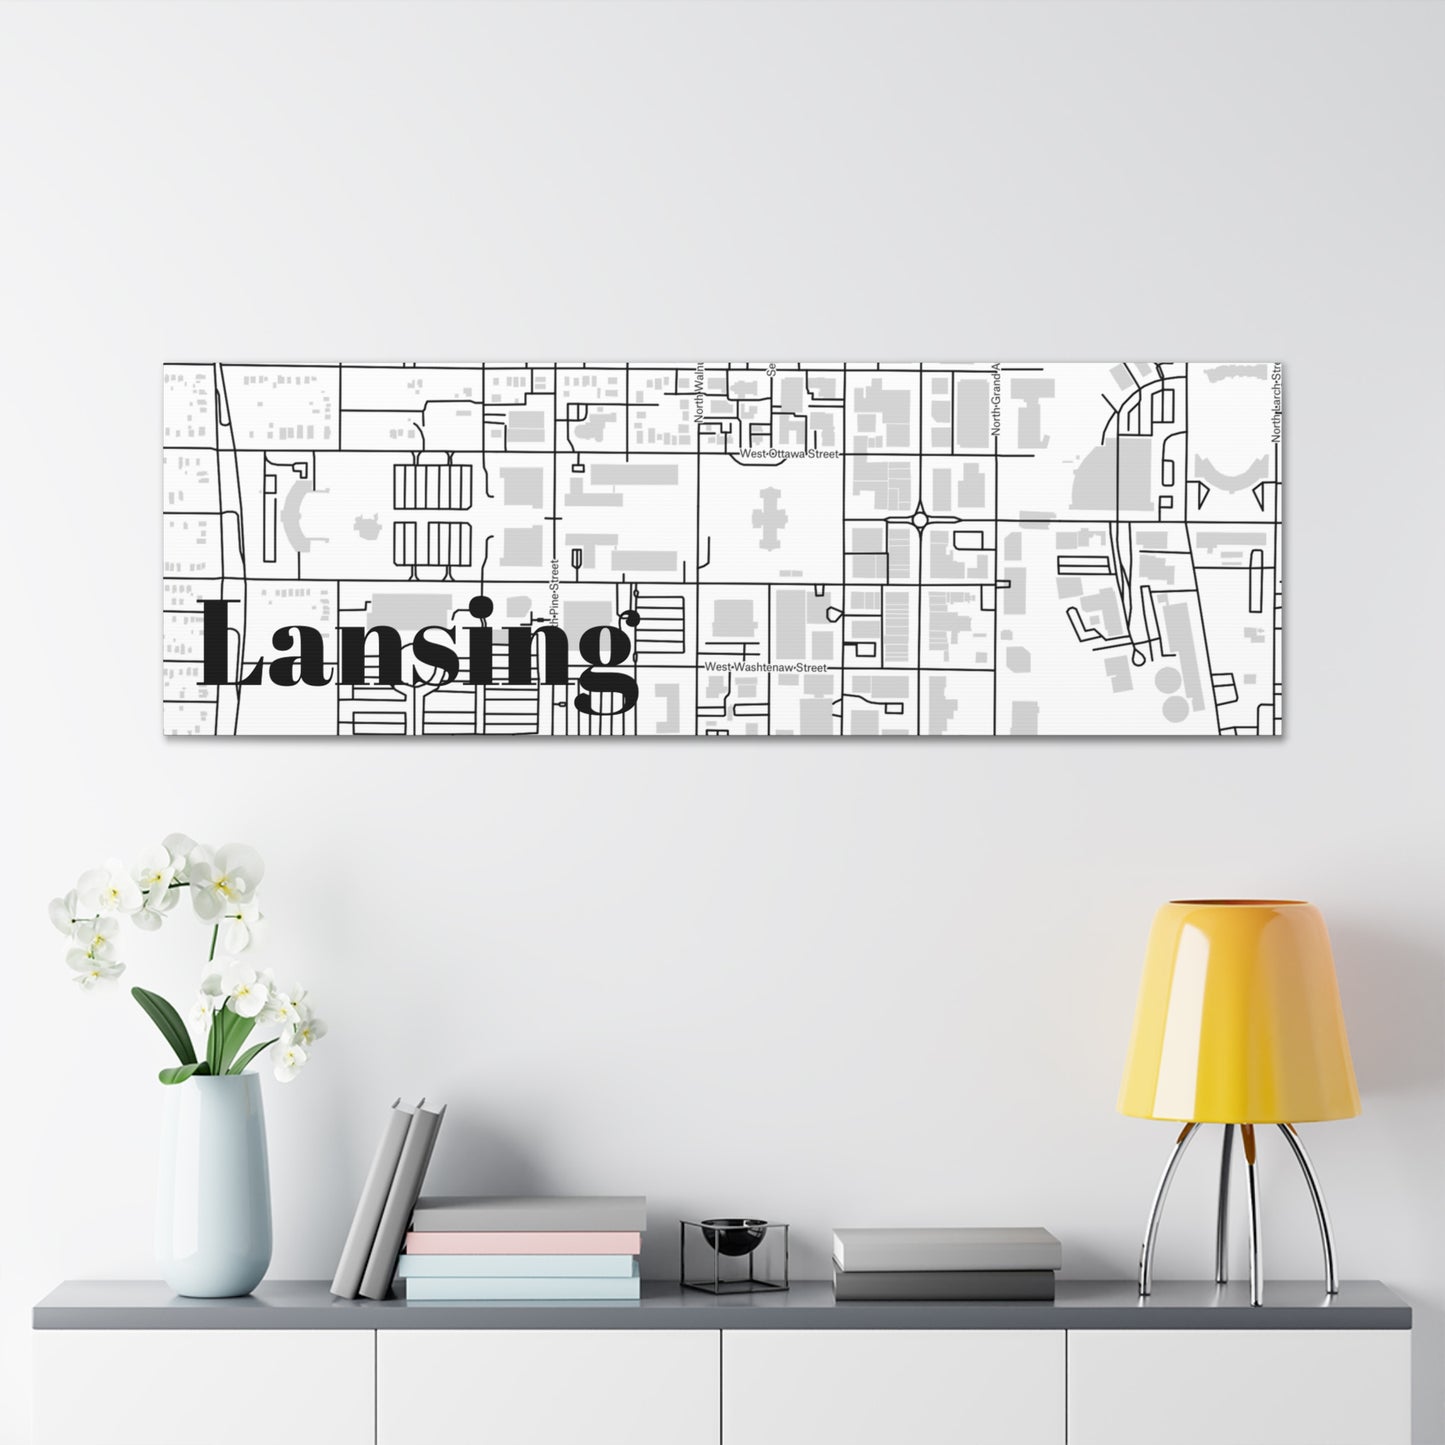 Lansing (Downtown) Canvas